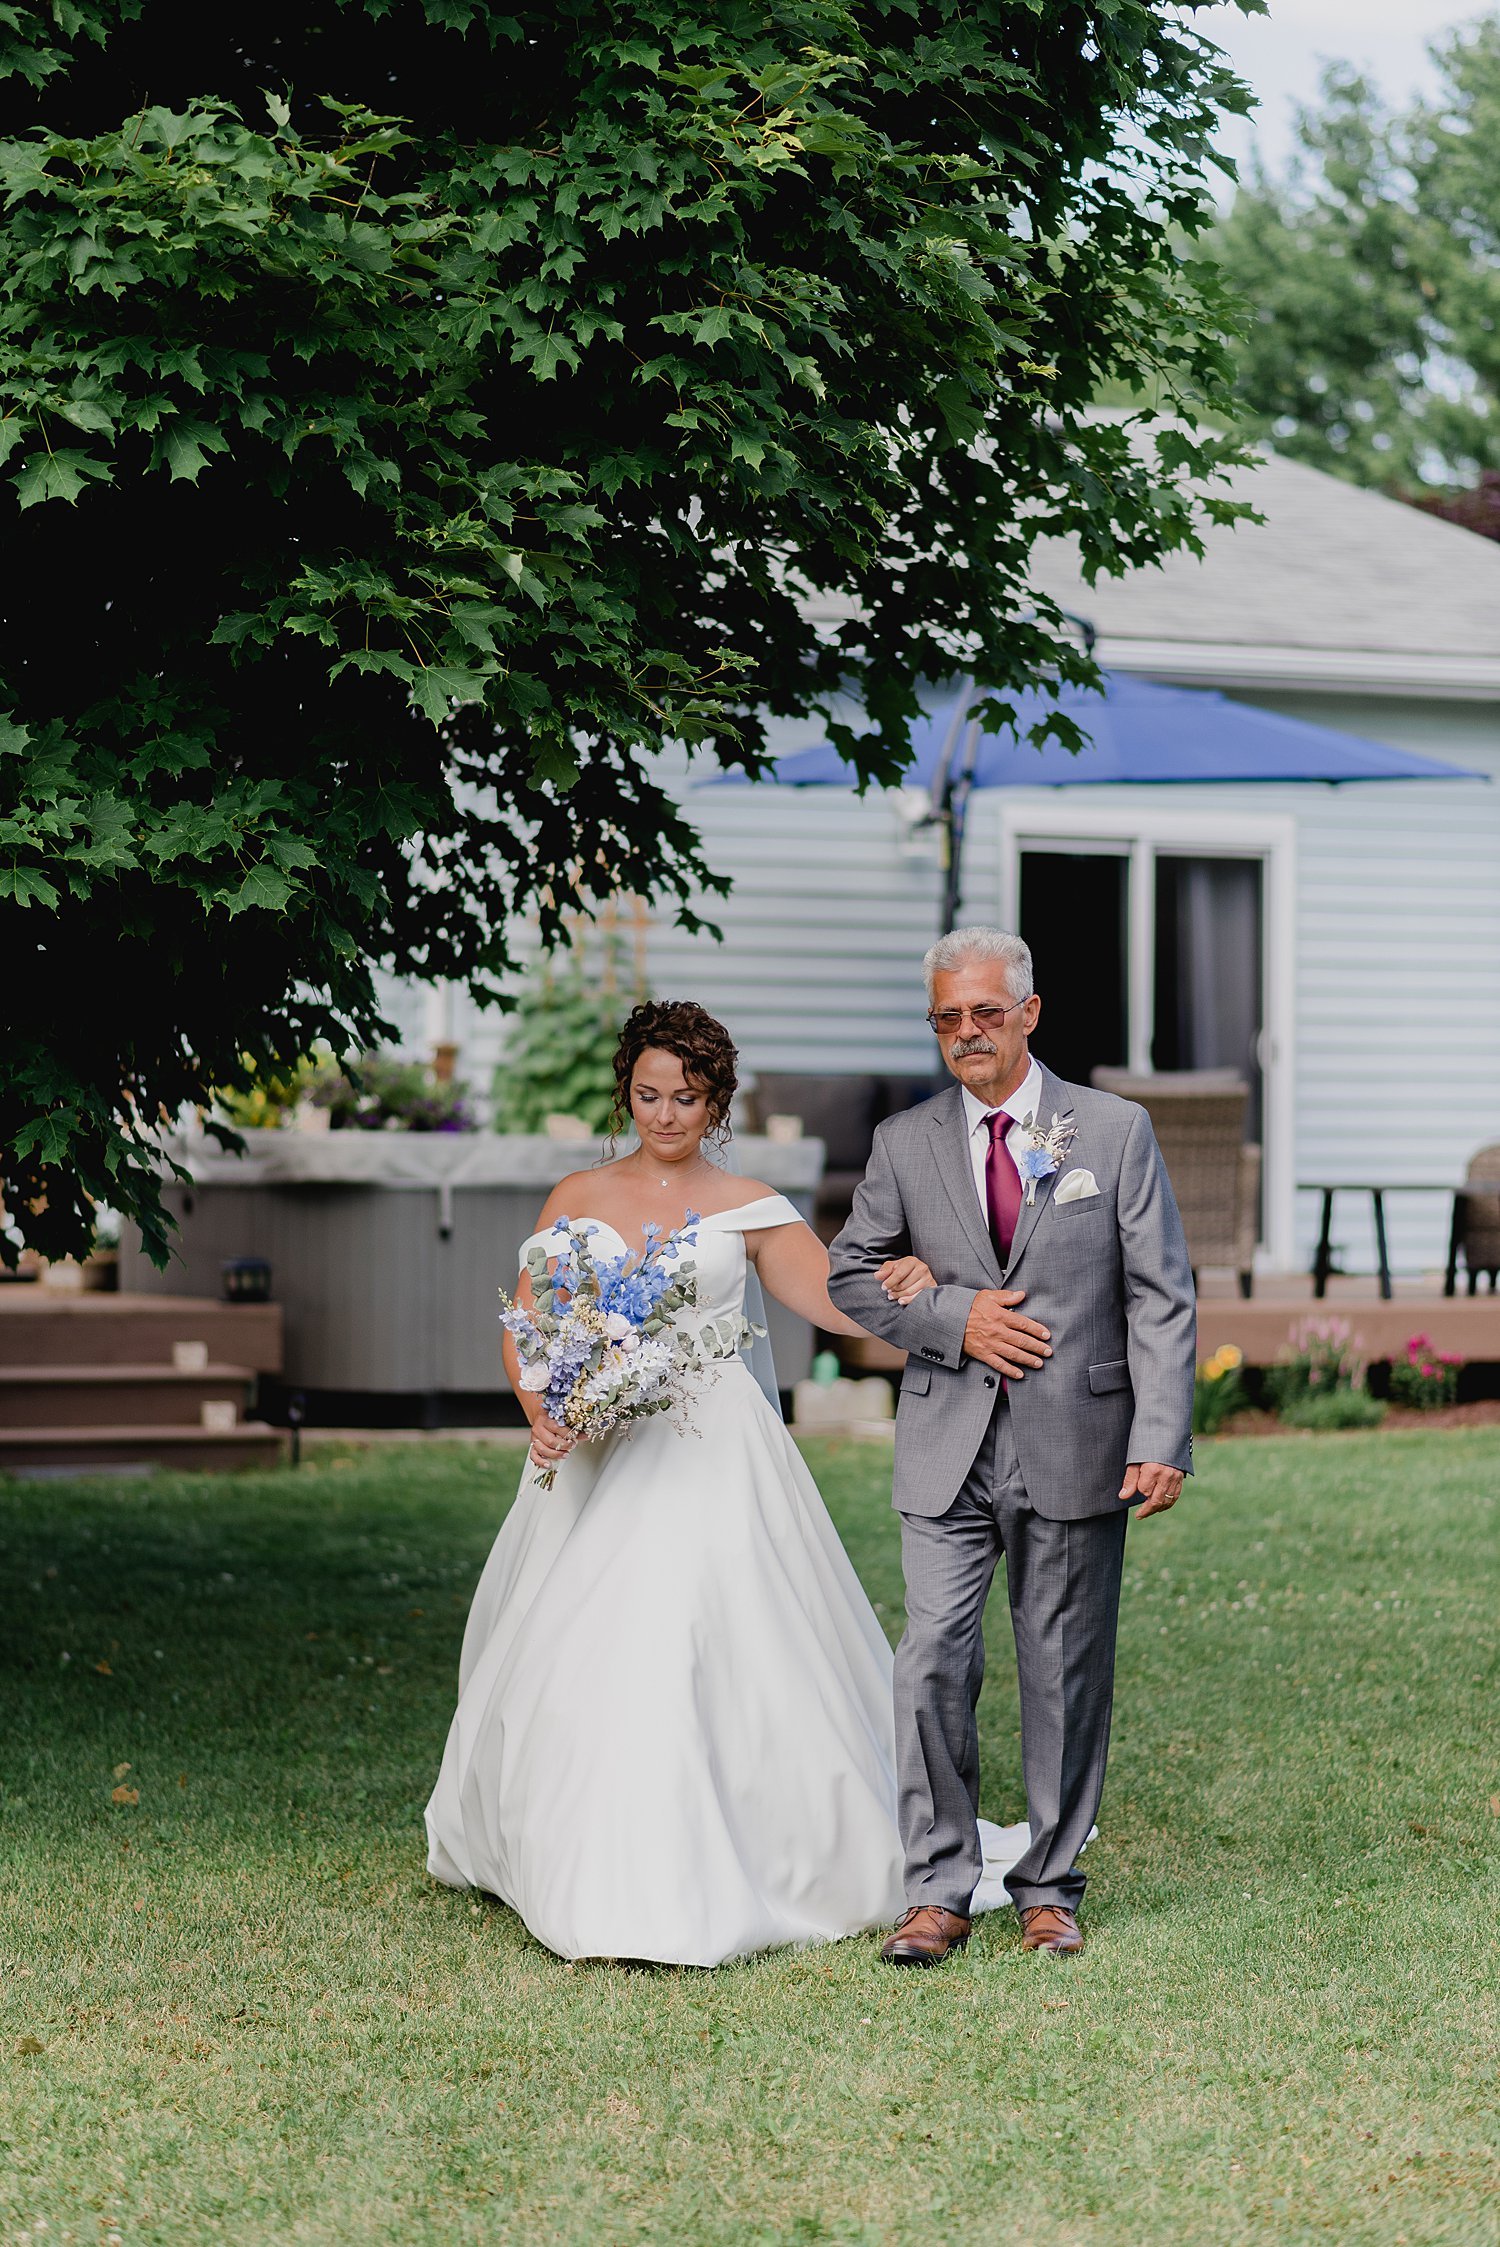 Elegant Summer Backyard Tented Wedding in Sydenham, Ontario | Prince Edward County Wedding Photographer | Holly McMurter Photographs_0046.jpg